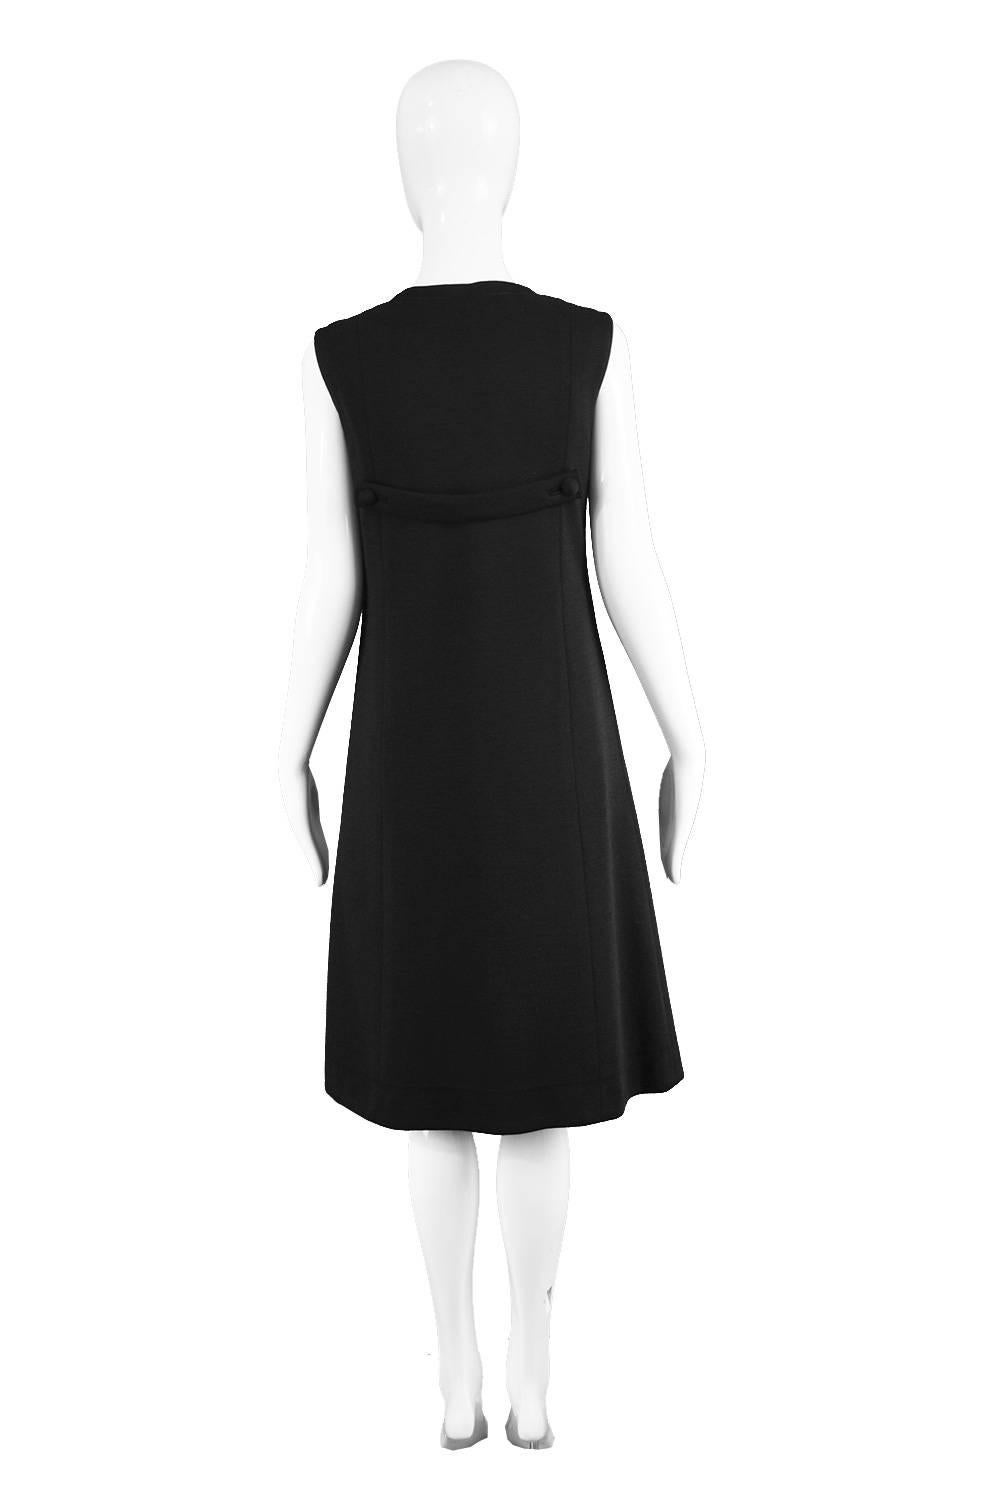 Jean Patou Vintage 1960s Black Wool Sleeveless Mod Minimalist Shift Dress  For Sale 3